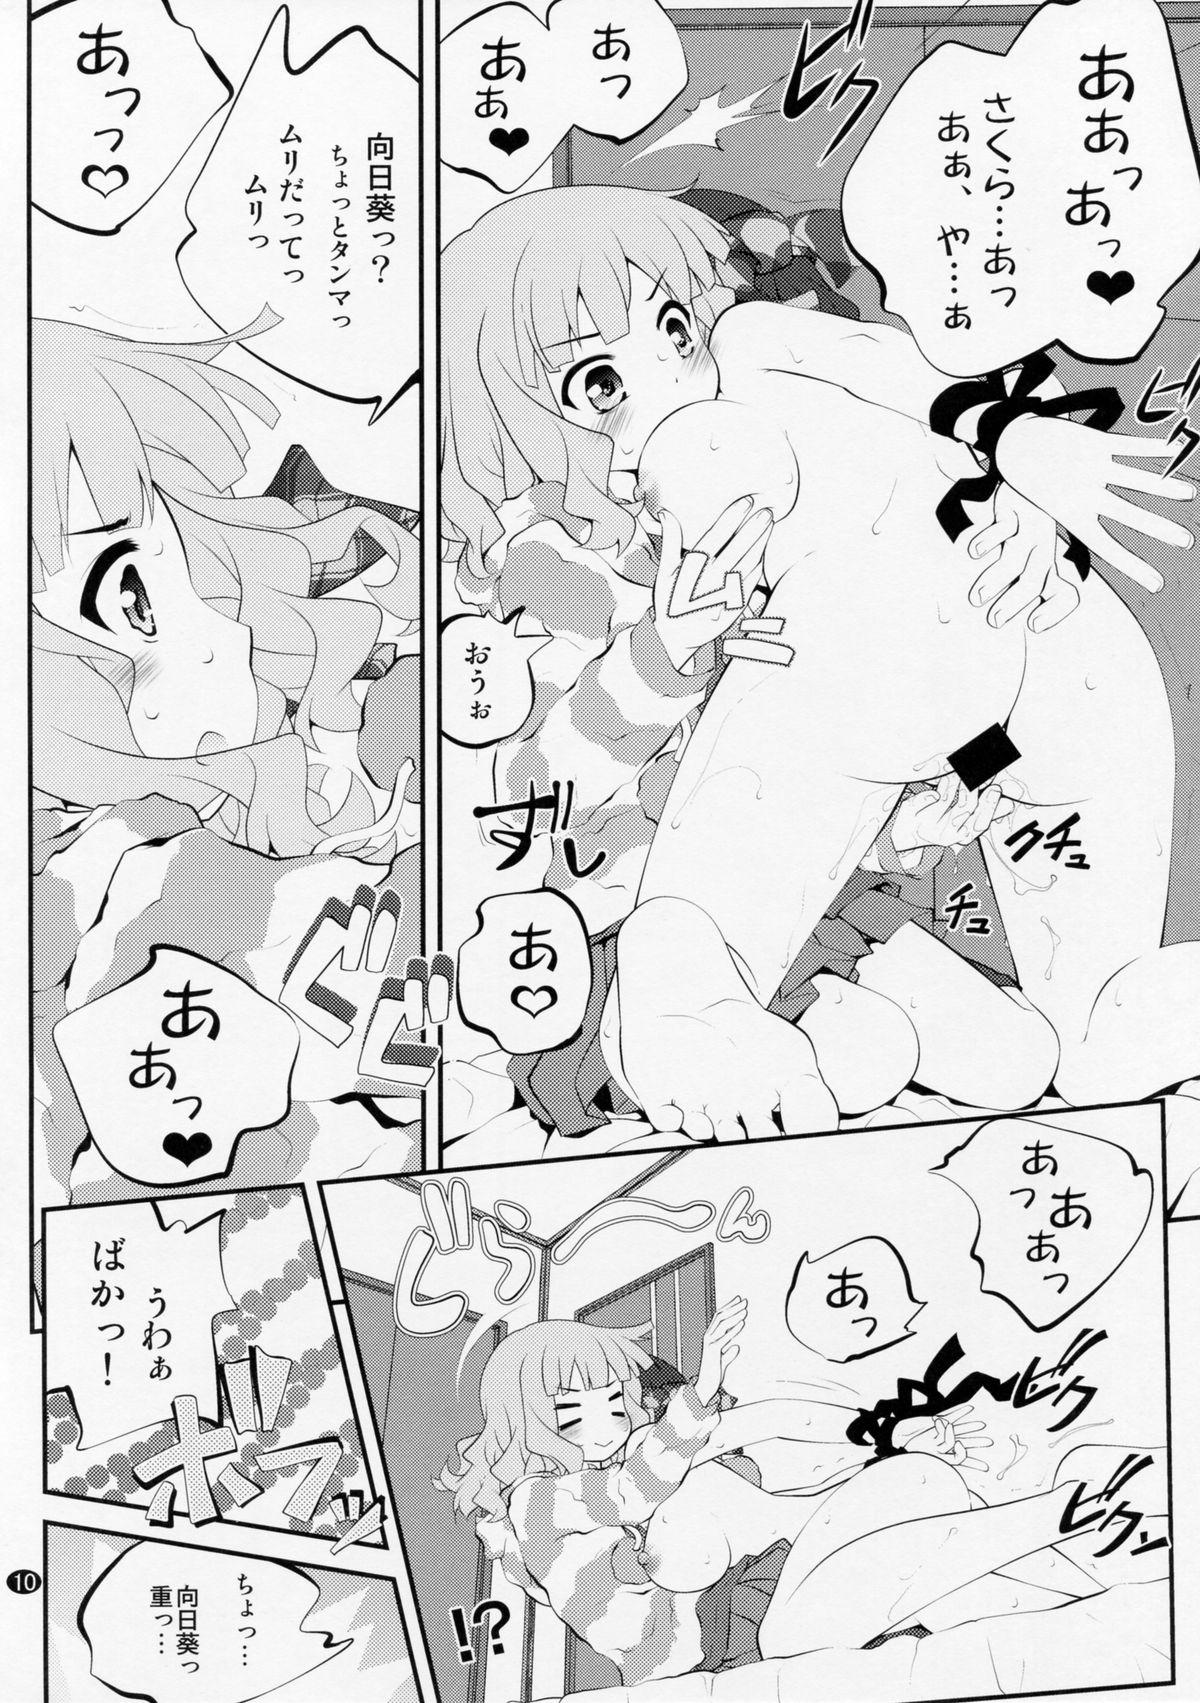 Spreading Himegoto Flowers 8 - Yuruyuri Hardcore Rough Sex - Page 9